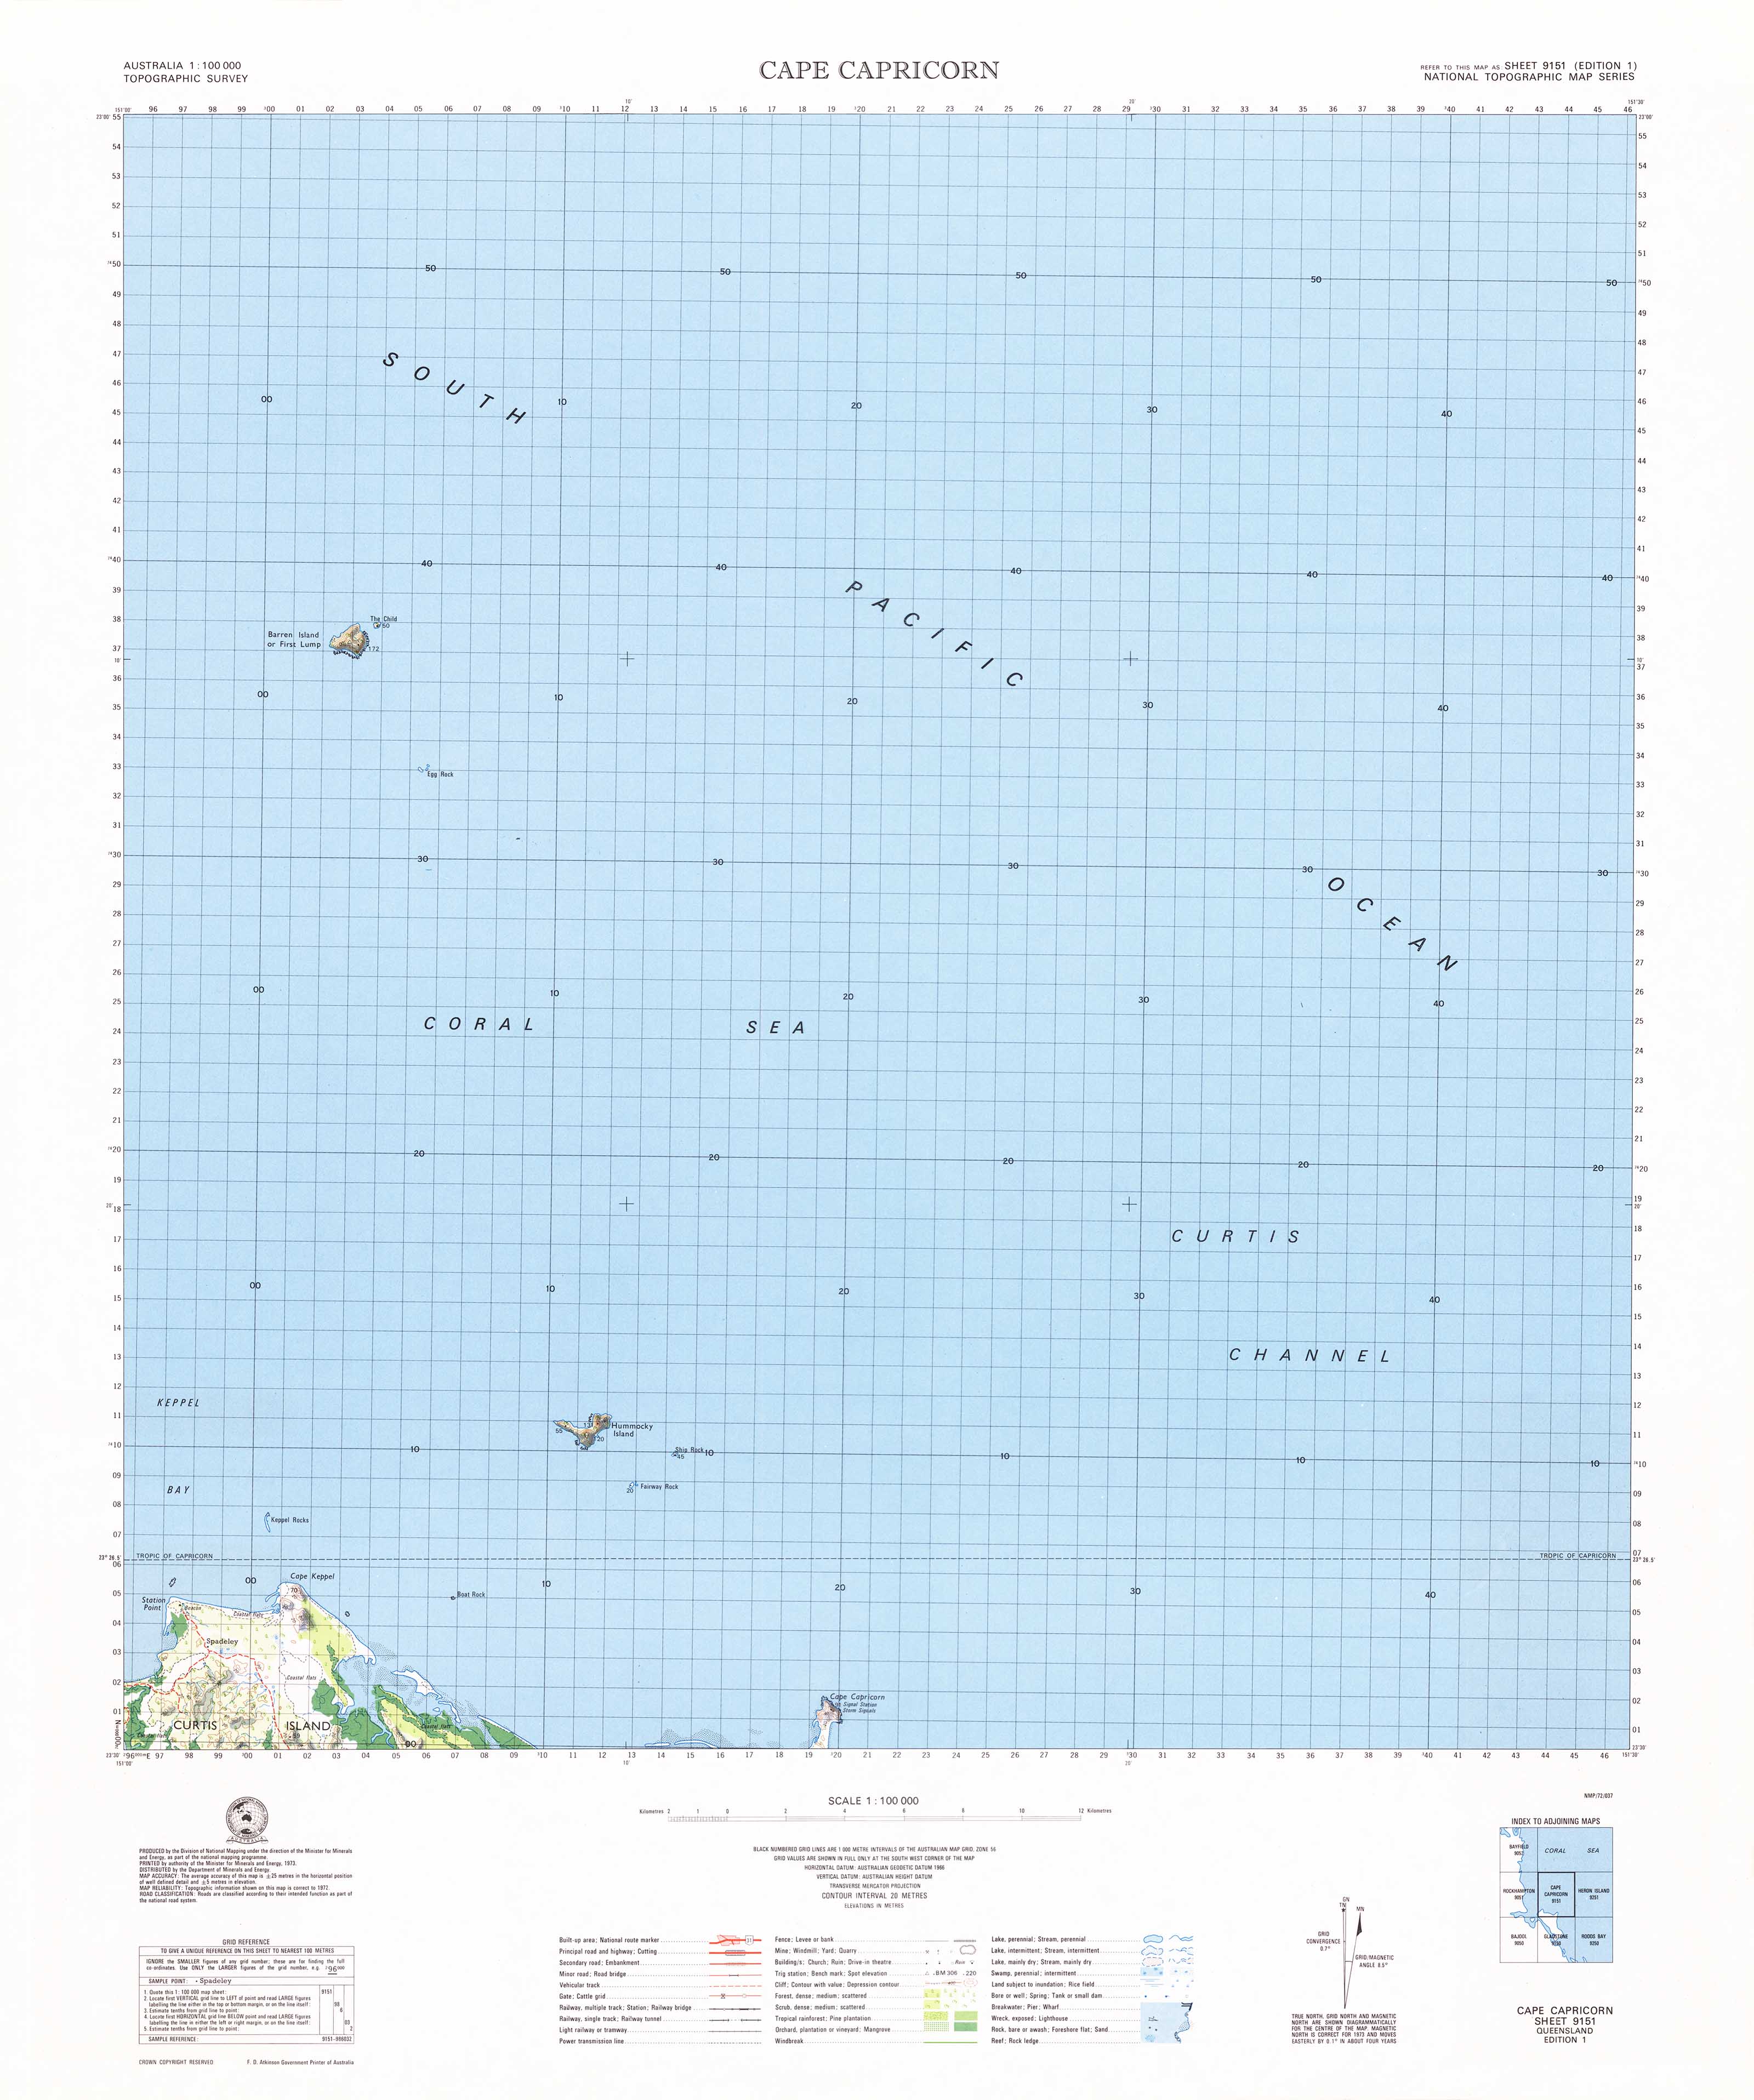 Buy 9151 Cape Capricorn 1:100k Topographic Map